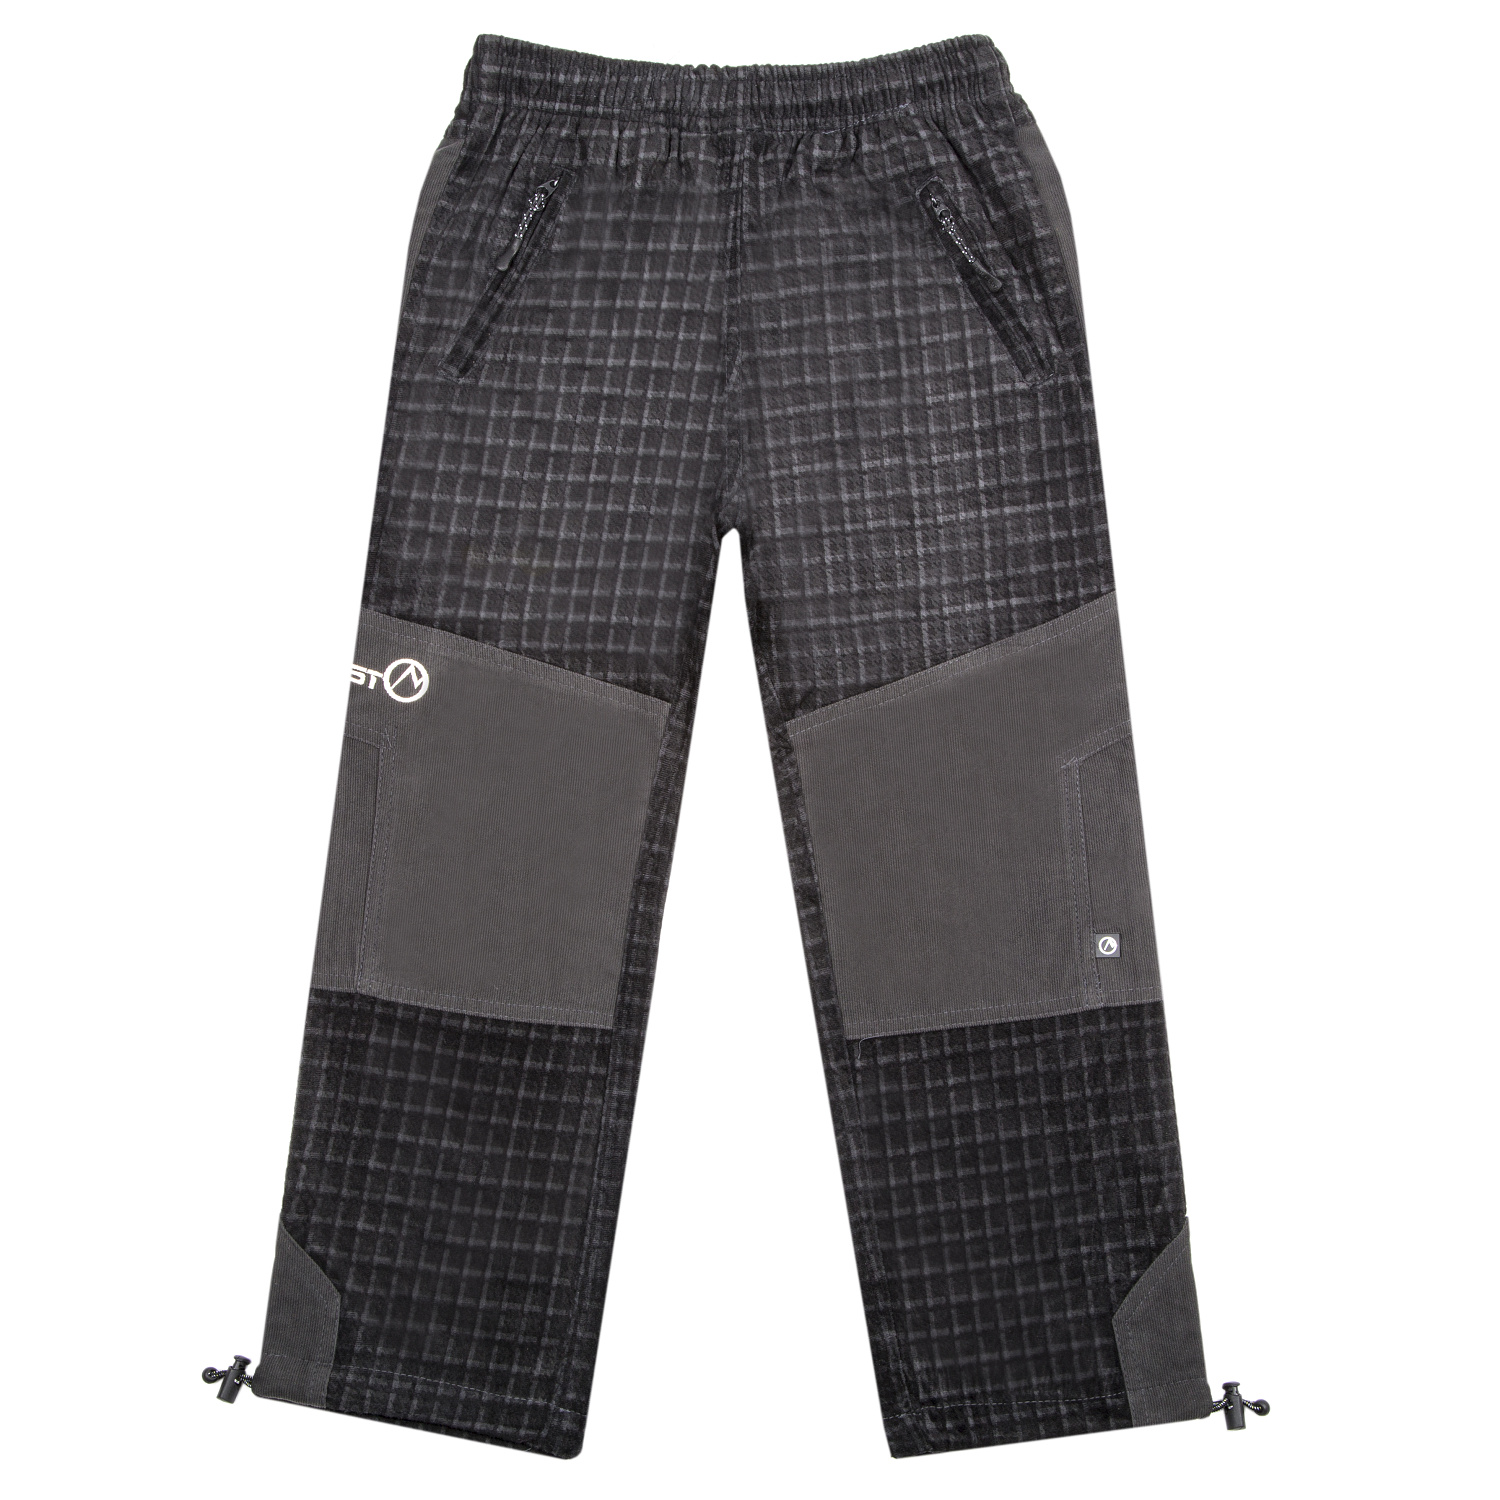 Chlapecké outdoorové kalhoty - NEVEREST F-921cc, šedá Barva: Šedá, Velikost: 98